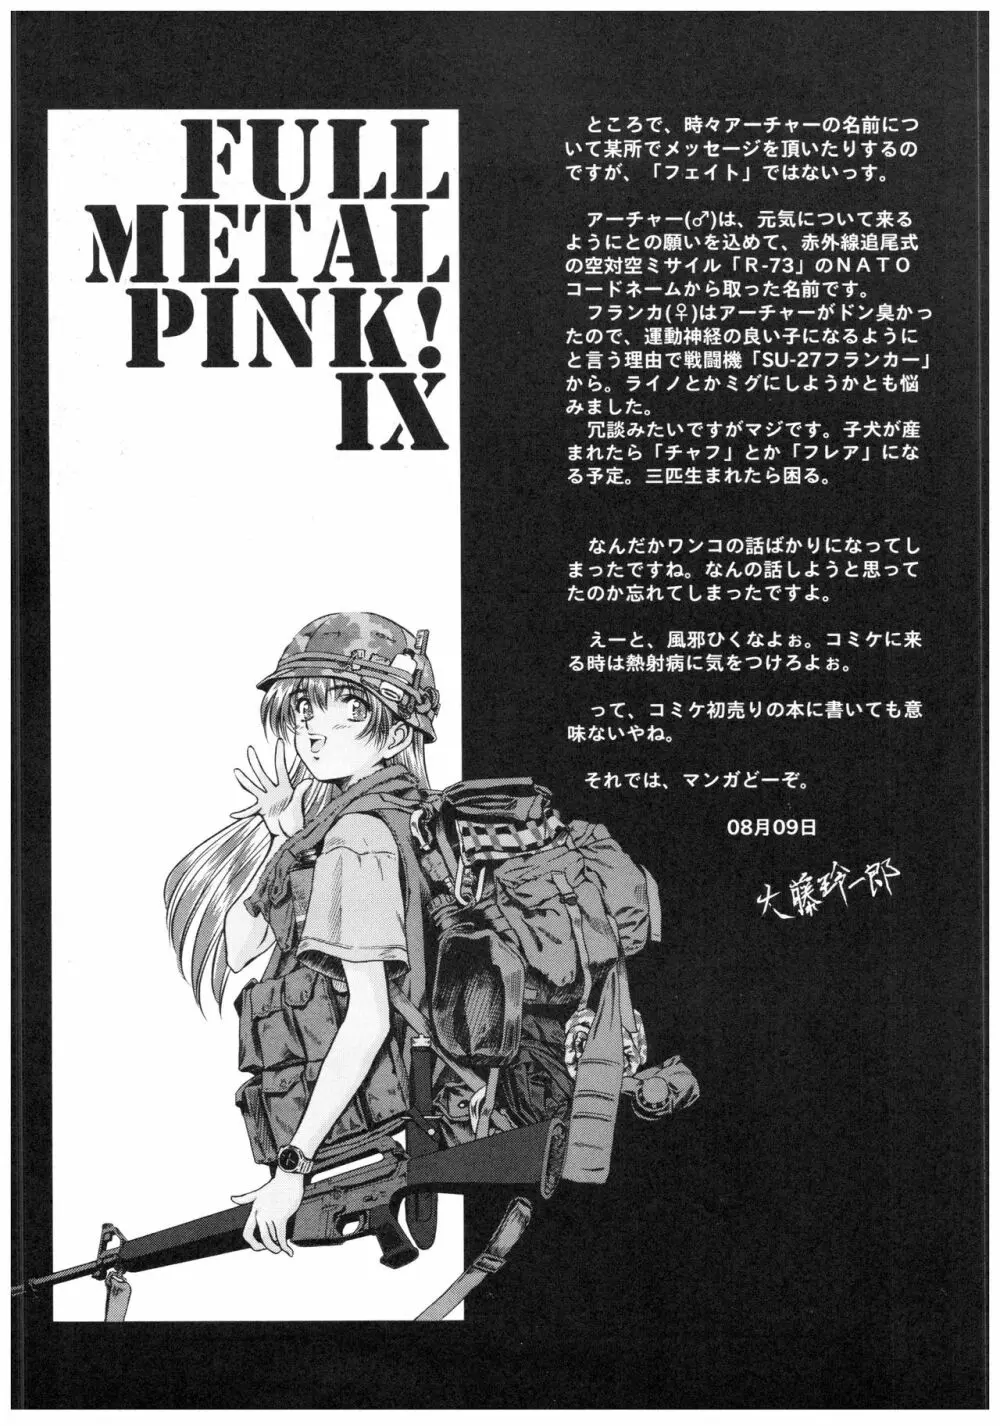 Full Metal Pink! IX 14ページ